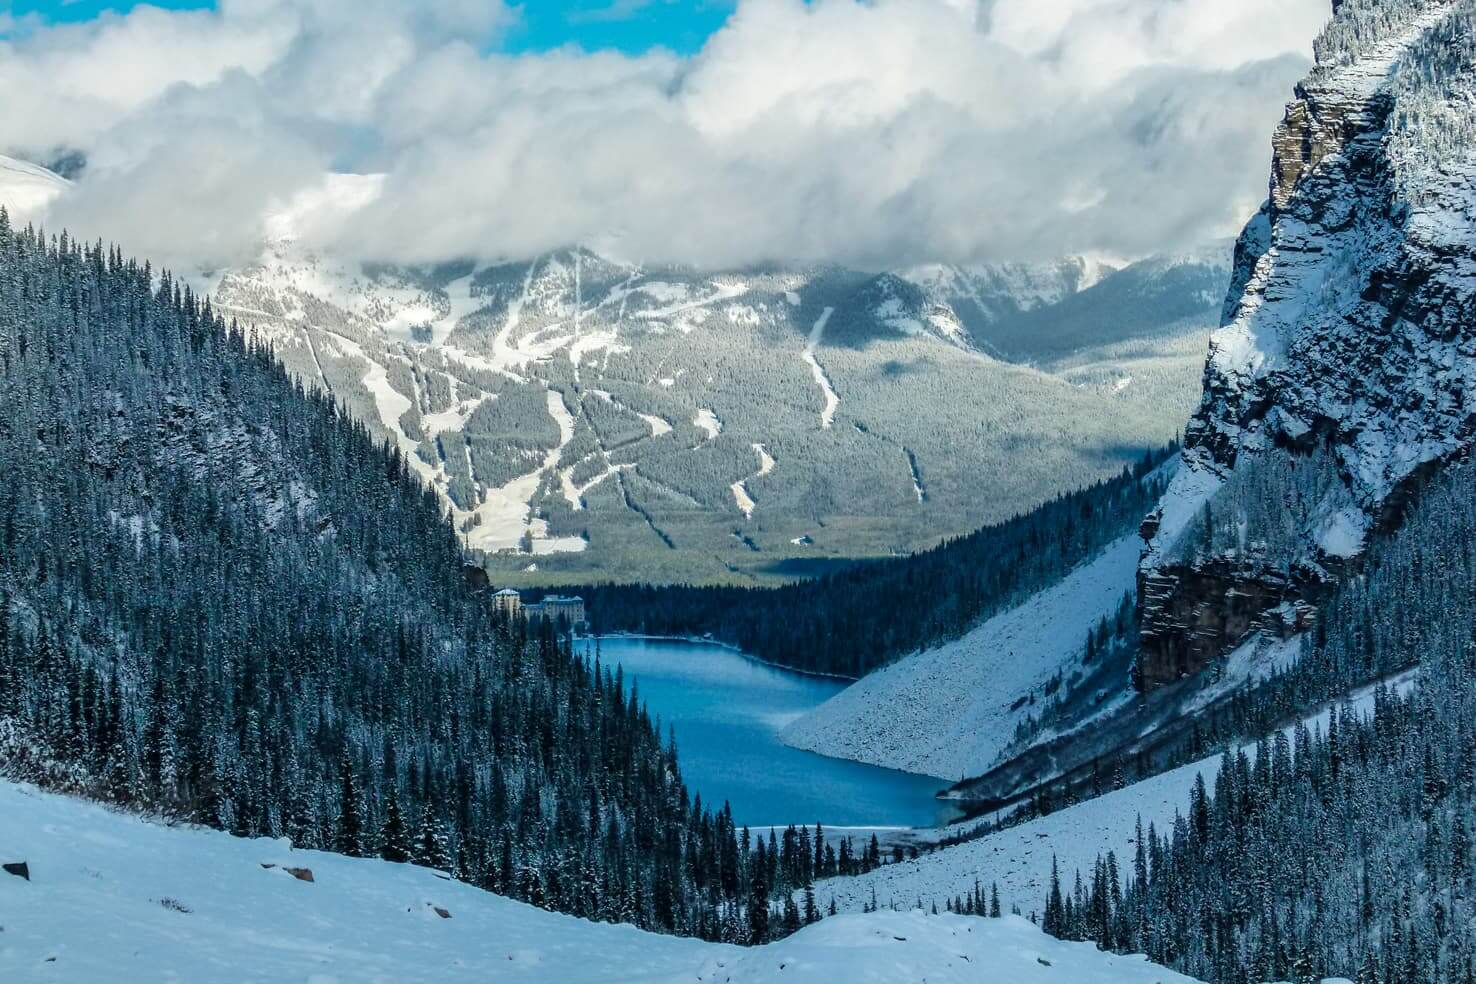 Banff hikes - 20 best hikes in Banff National Park, Canada - Banff